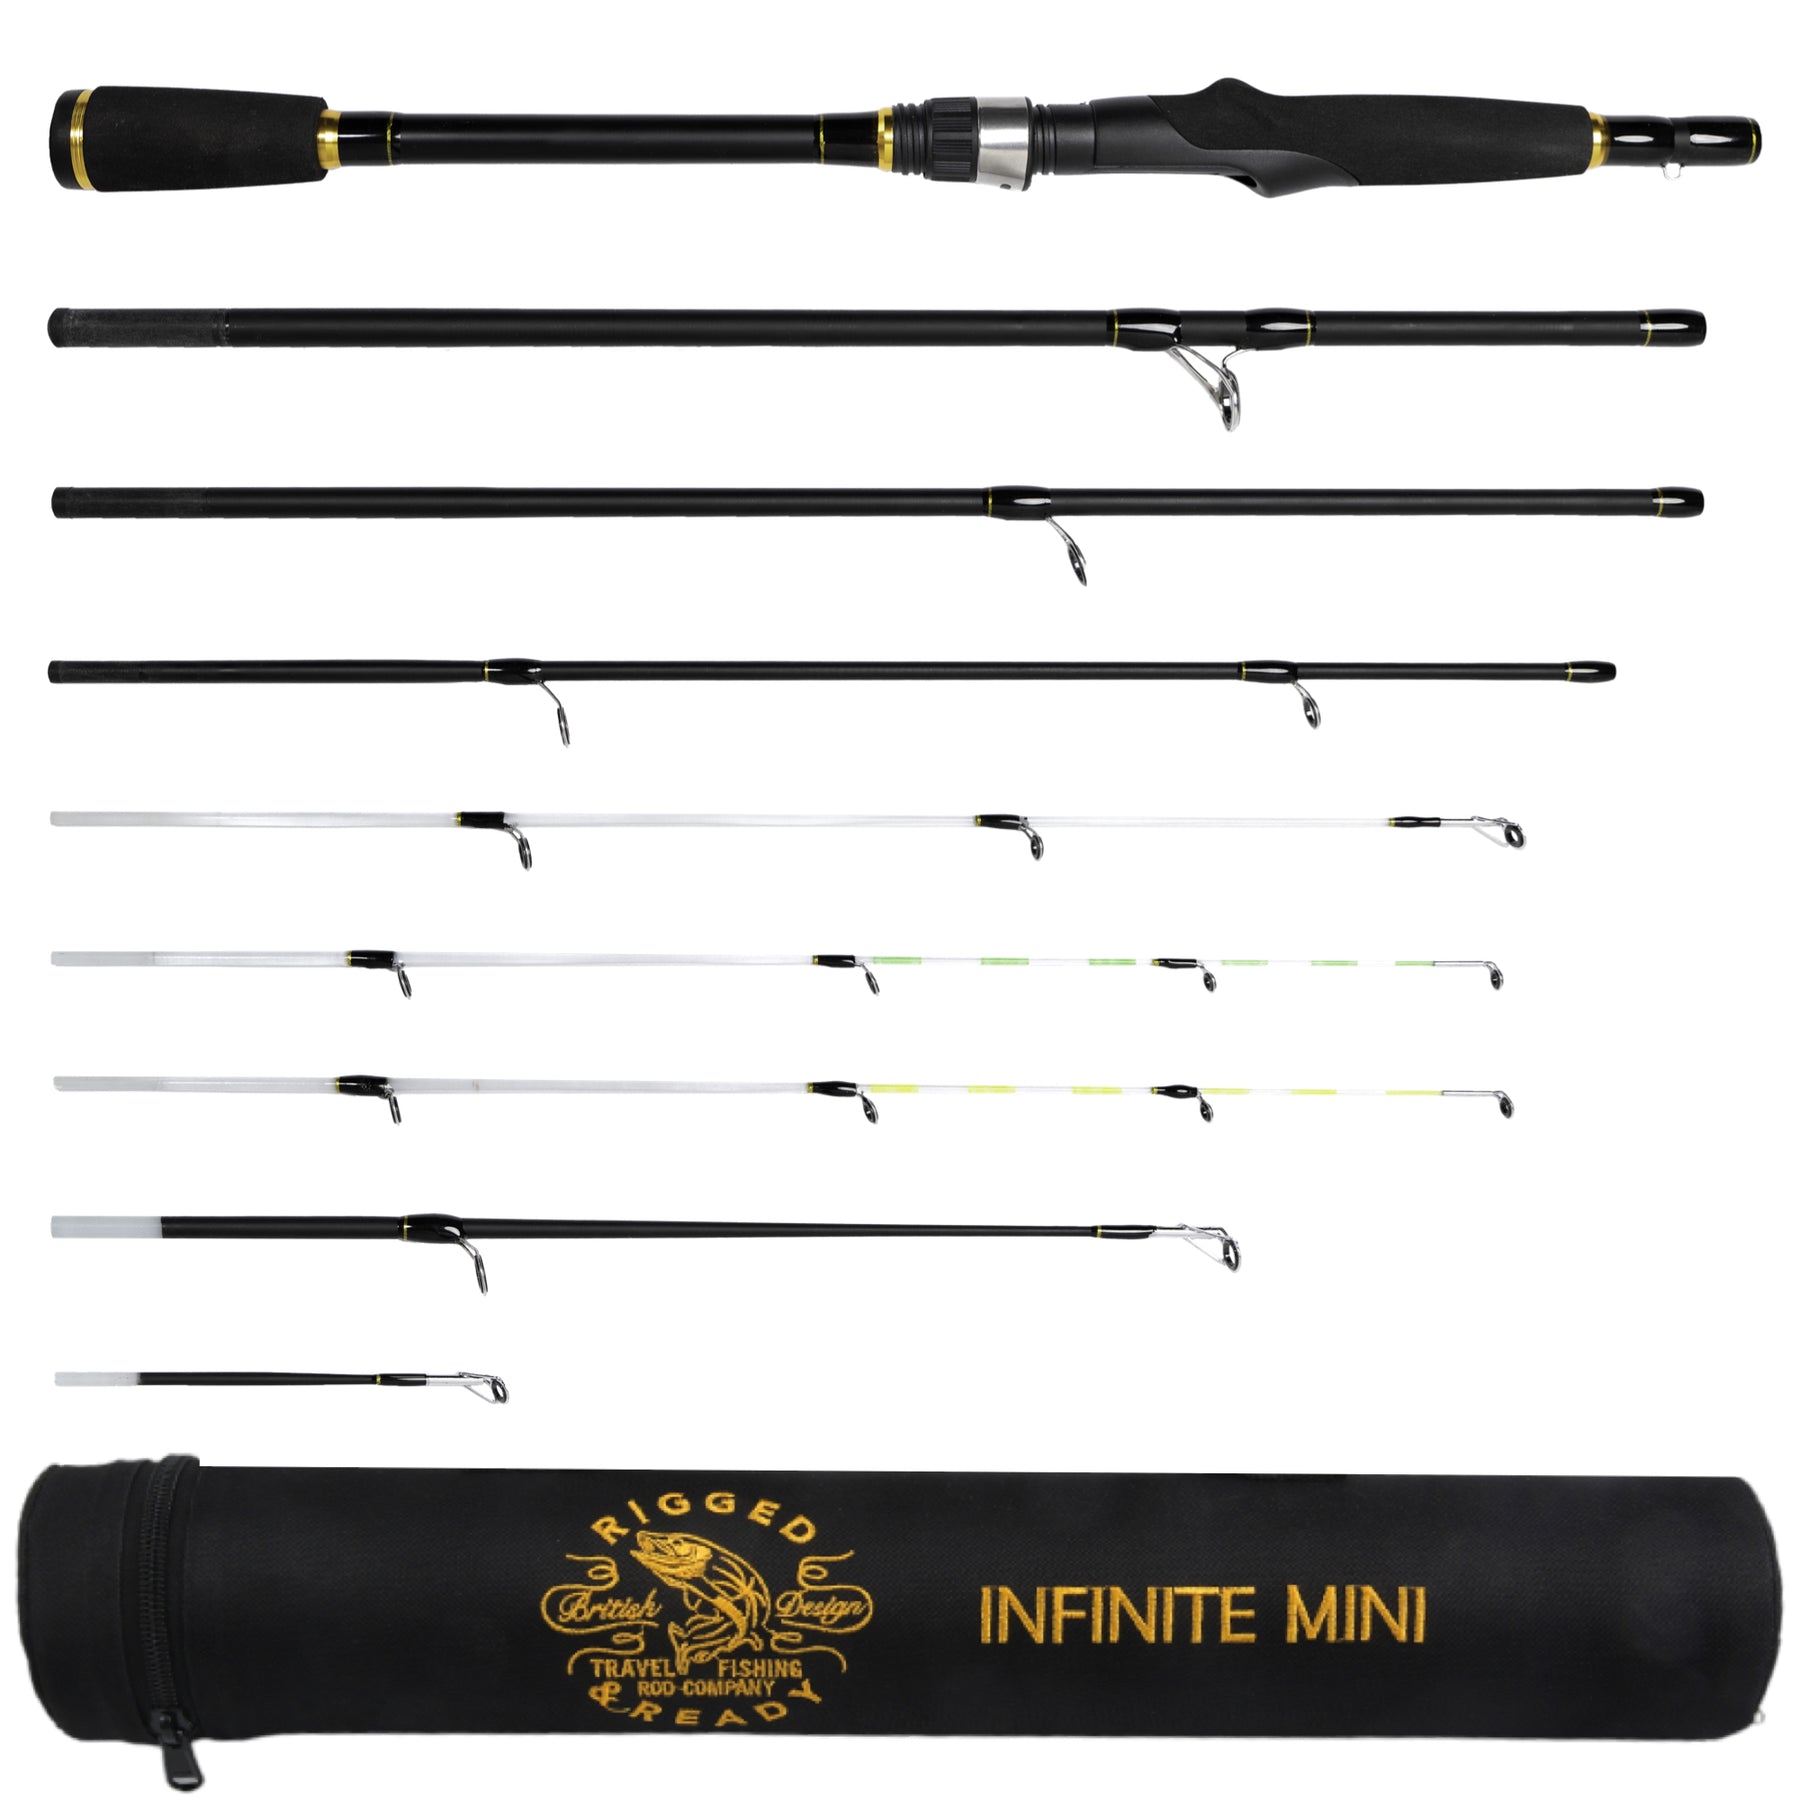 Infinite Mini. Spinning-Baitcast Travel Fishing Rod. (10-in-1